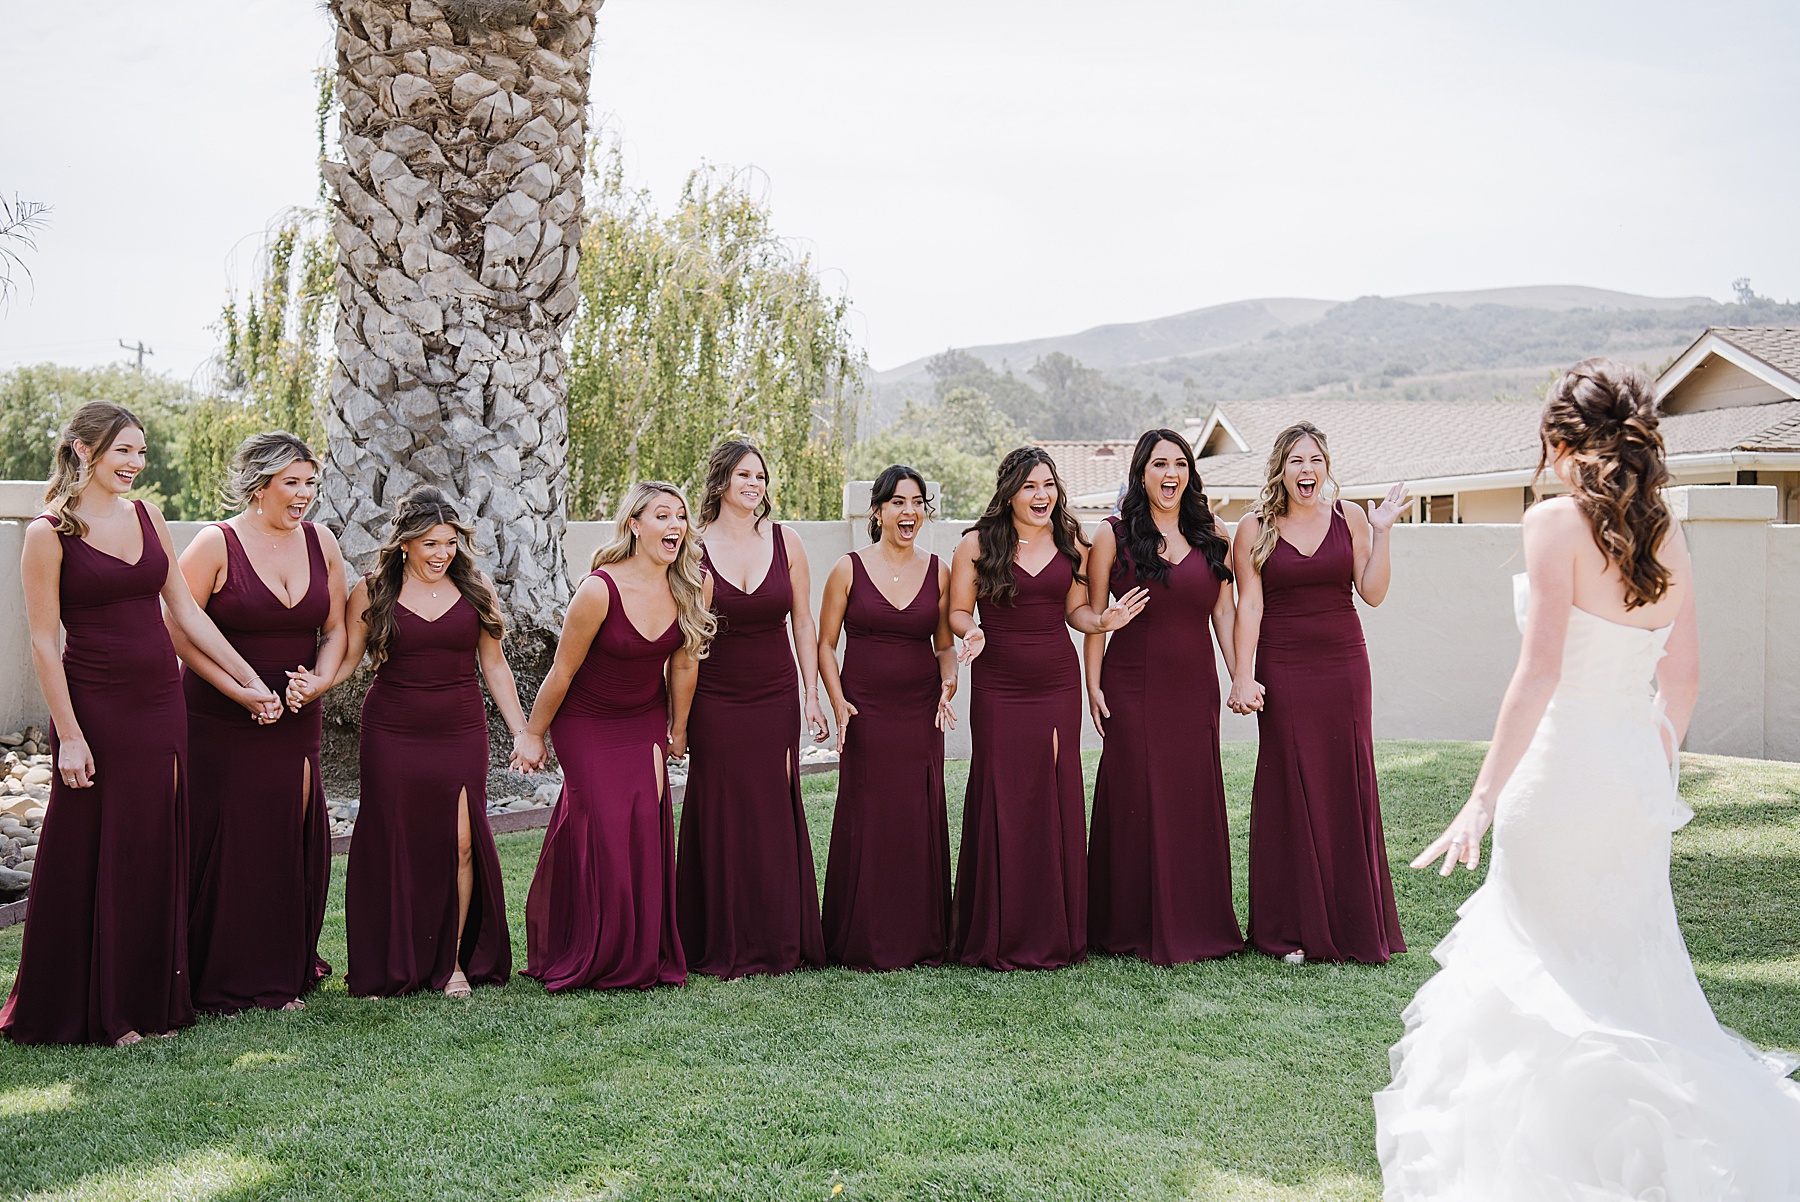 Riverbench Vineyard & Winery Fall Wedding in Santa Maria, California